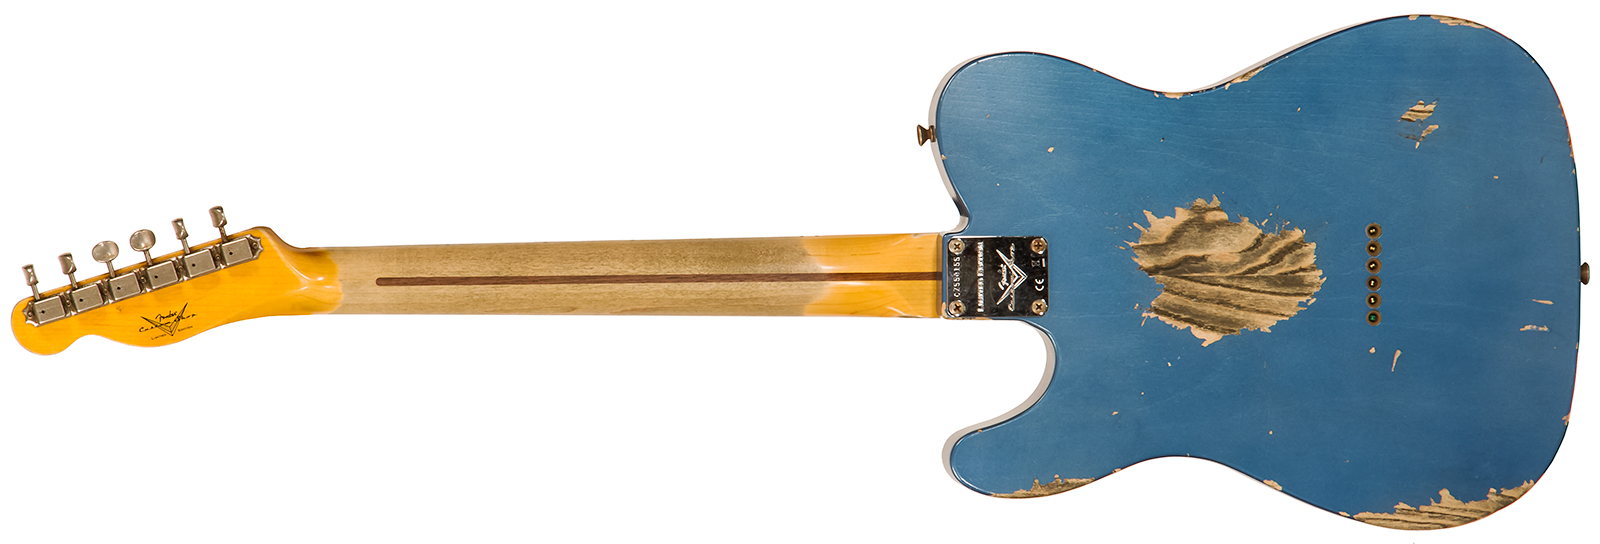 Fender Custom Shop Tele 1958 2s Ht Mn #cz550155 - Heavy Relic Lake Placid Blue - Televorm elektrische gitaar - Variation 1